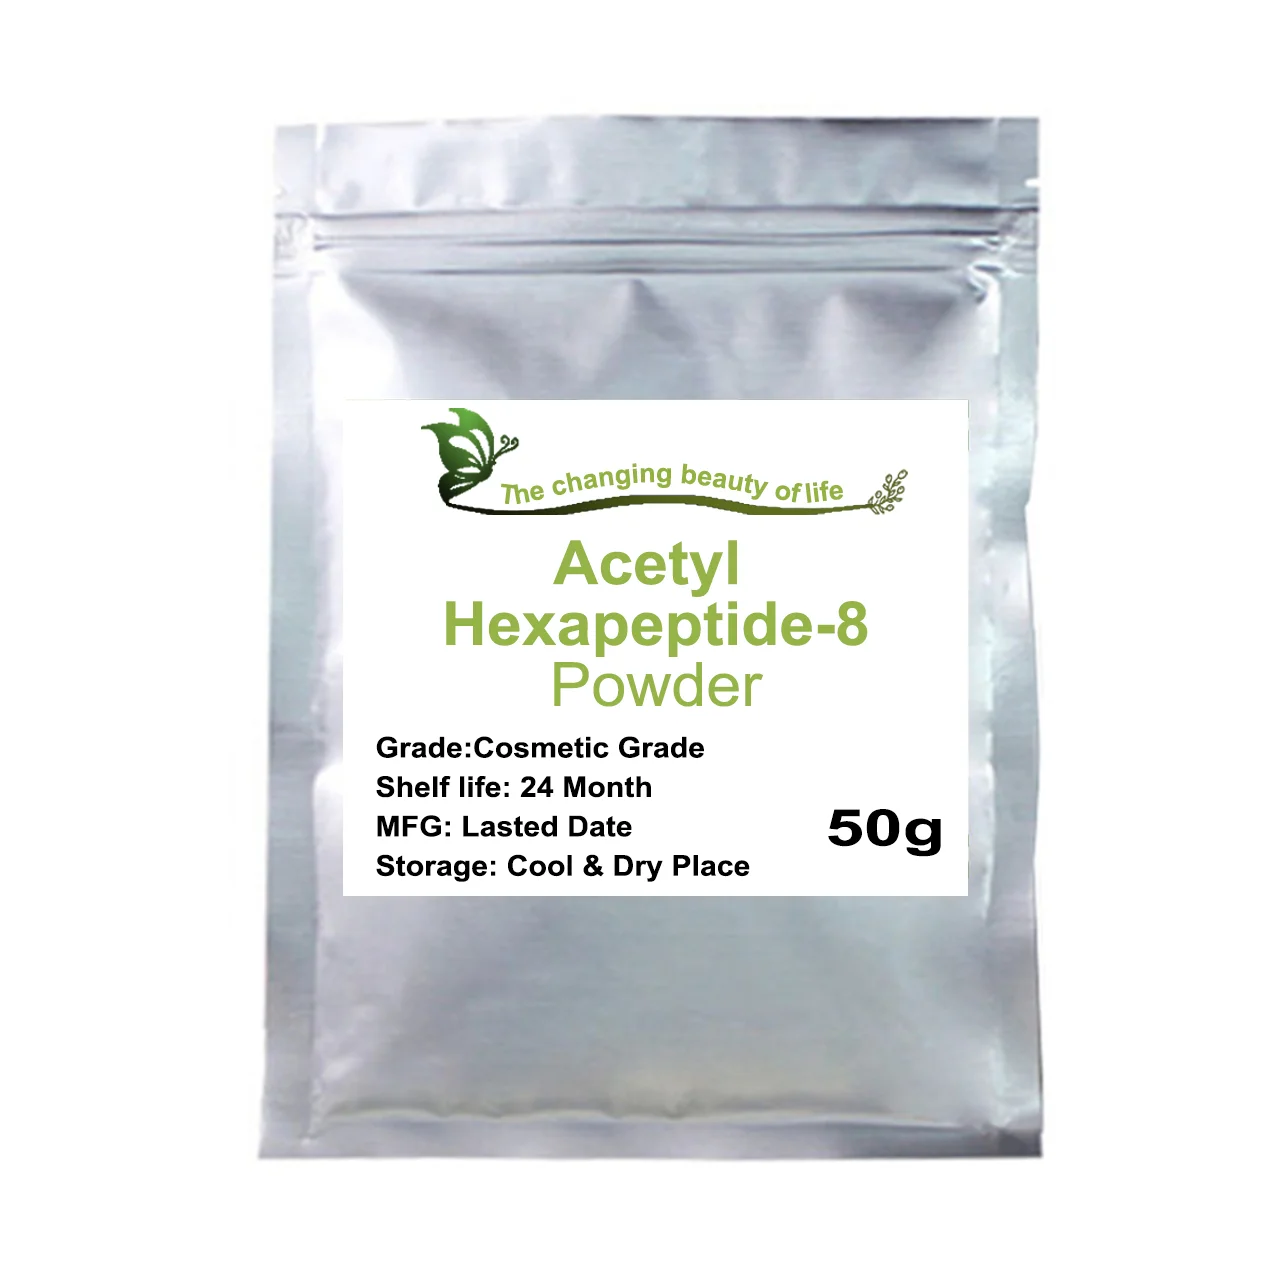 

Acetyl Hexapeptide-8 Wrinkle Removing Hexapeptide Powder